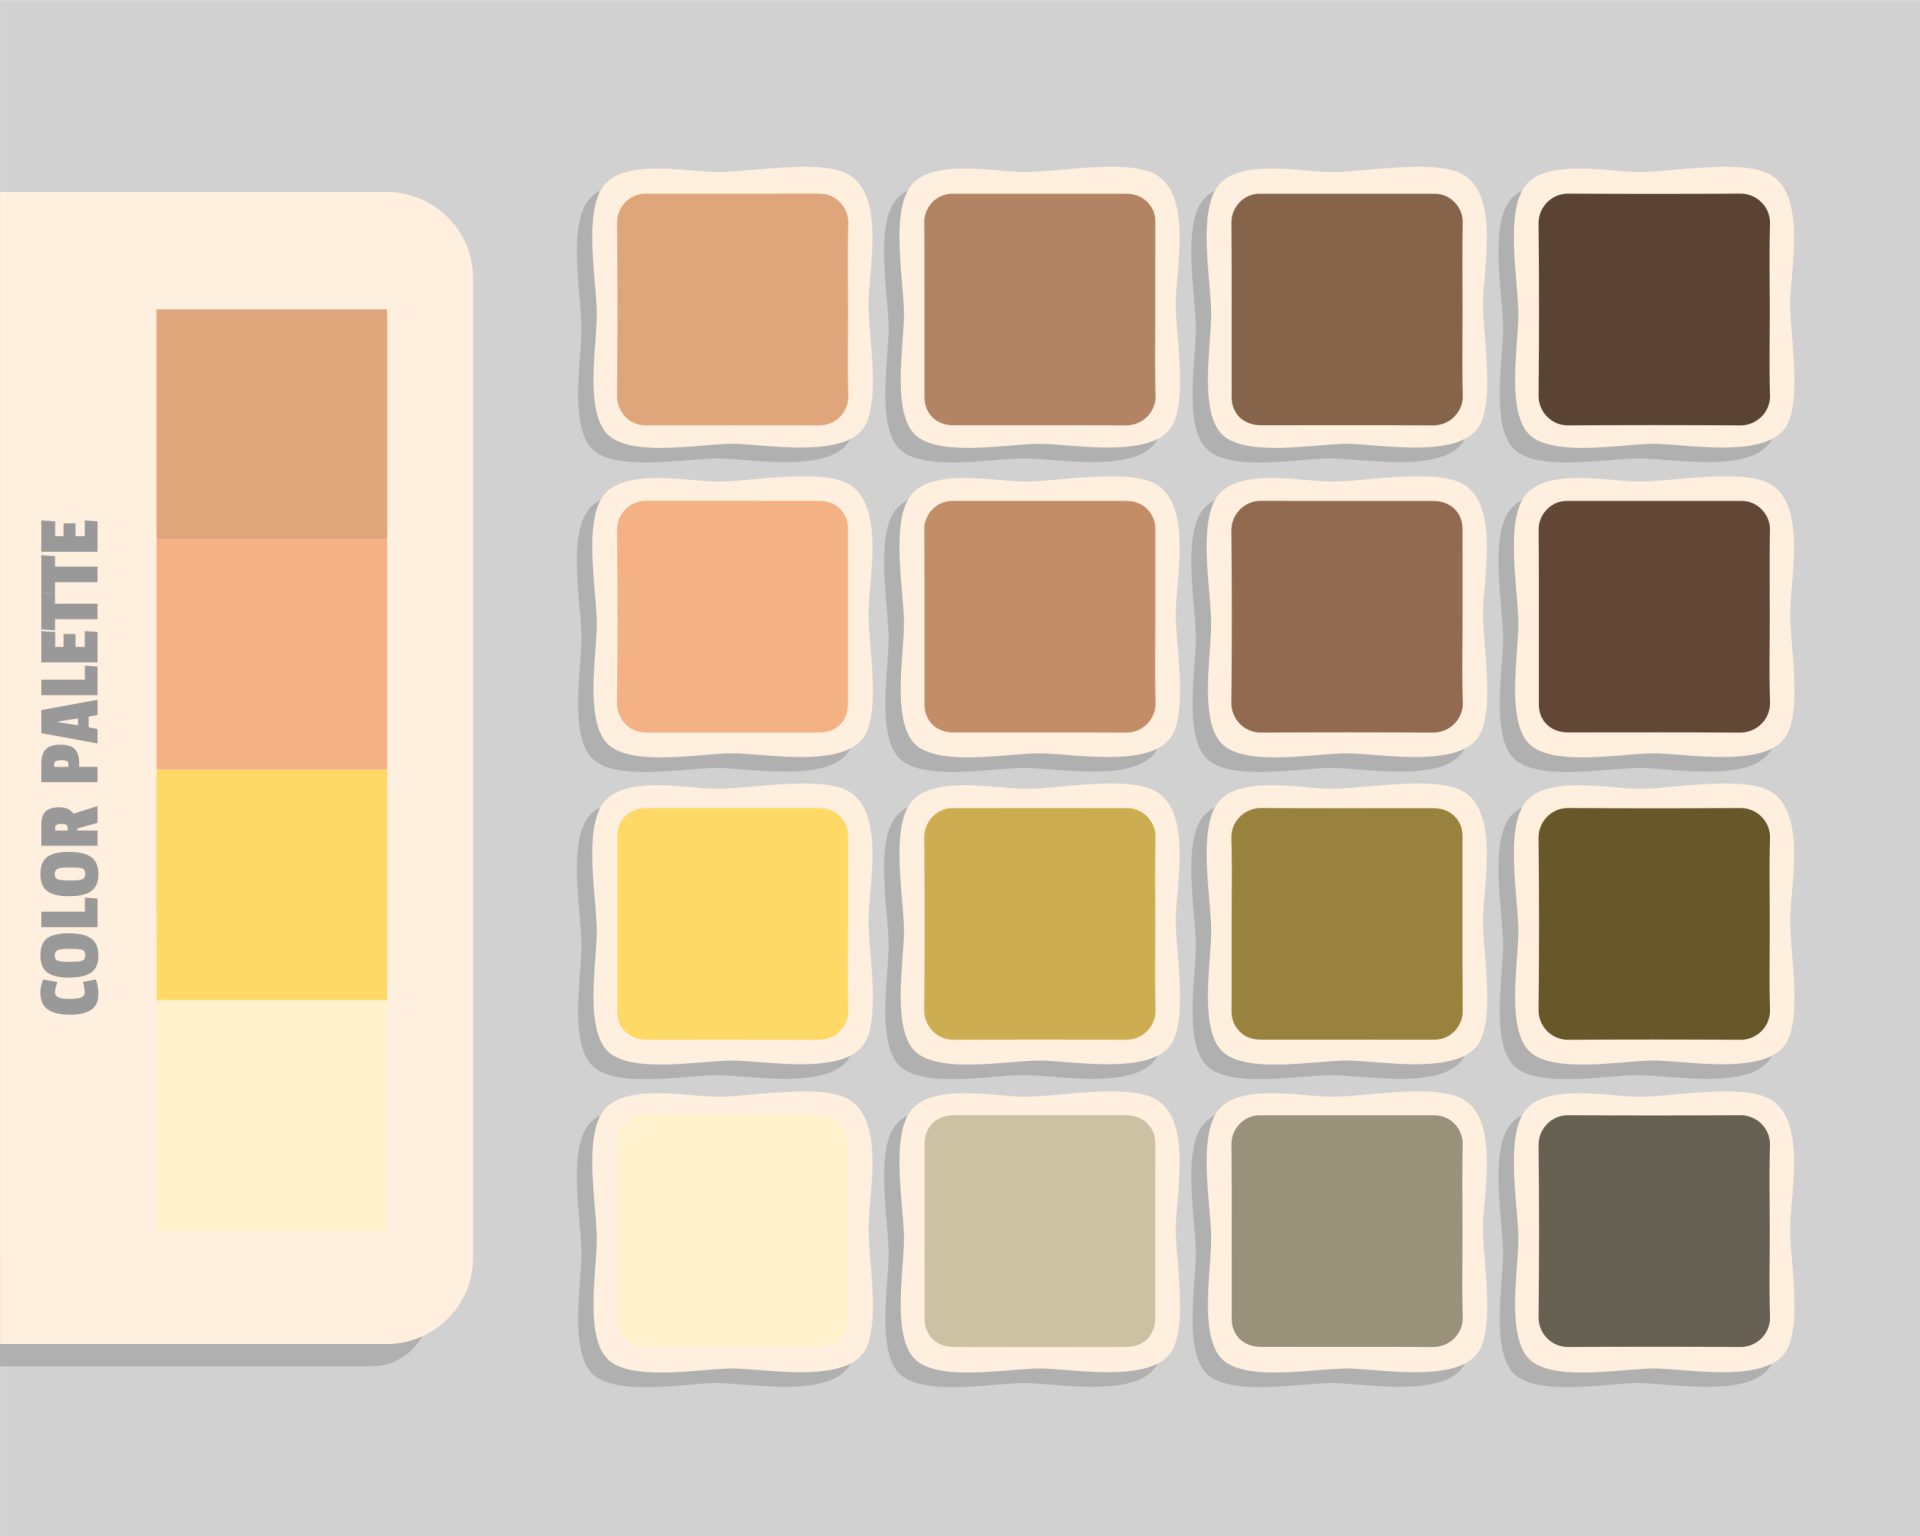 Contoh Palet Warna Earth Tone dengan Nuansa Coklat, Cream, dan Beige | Sumber Gambar: Freepik